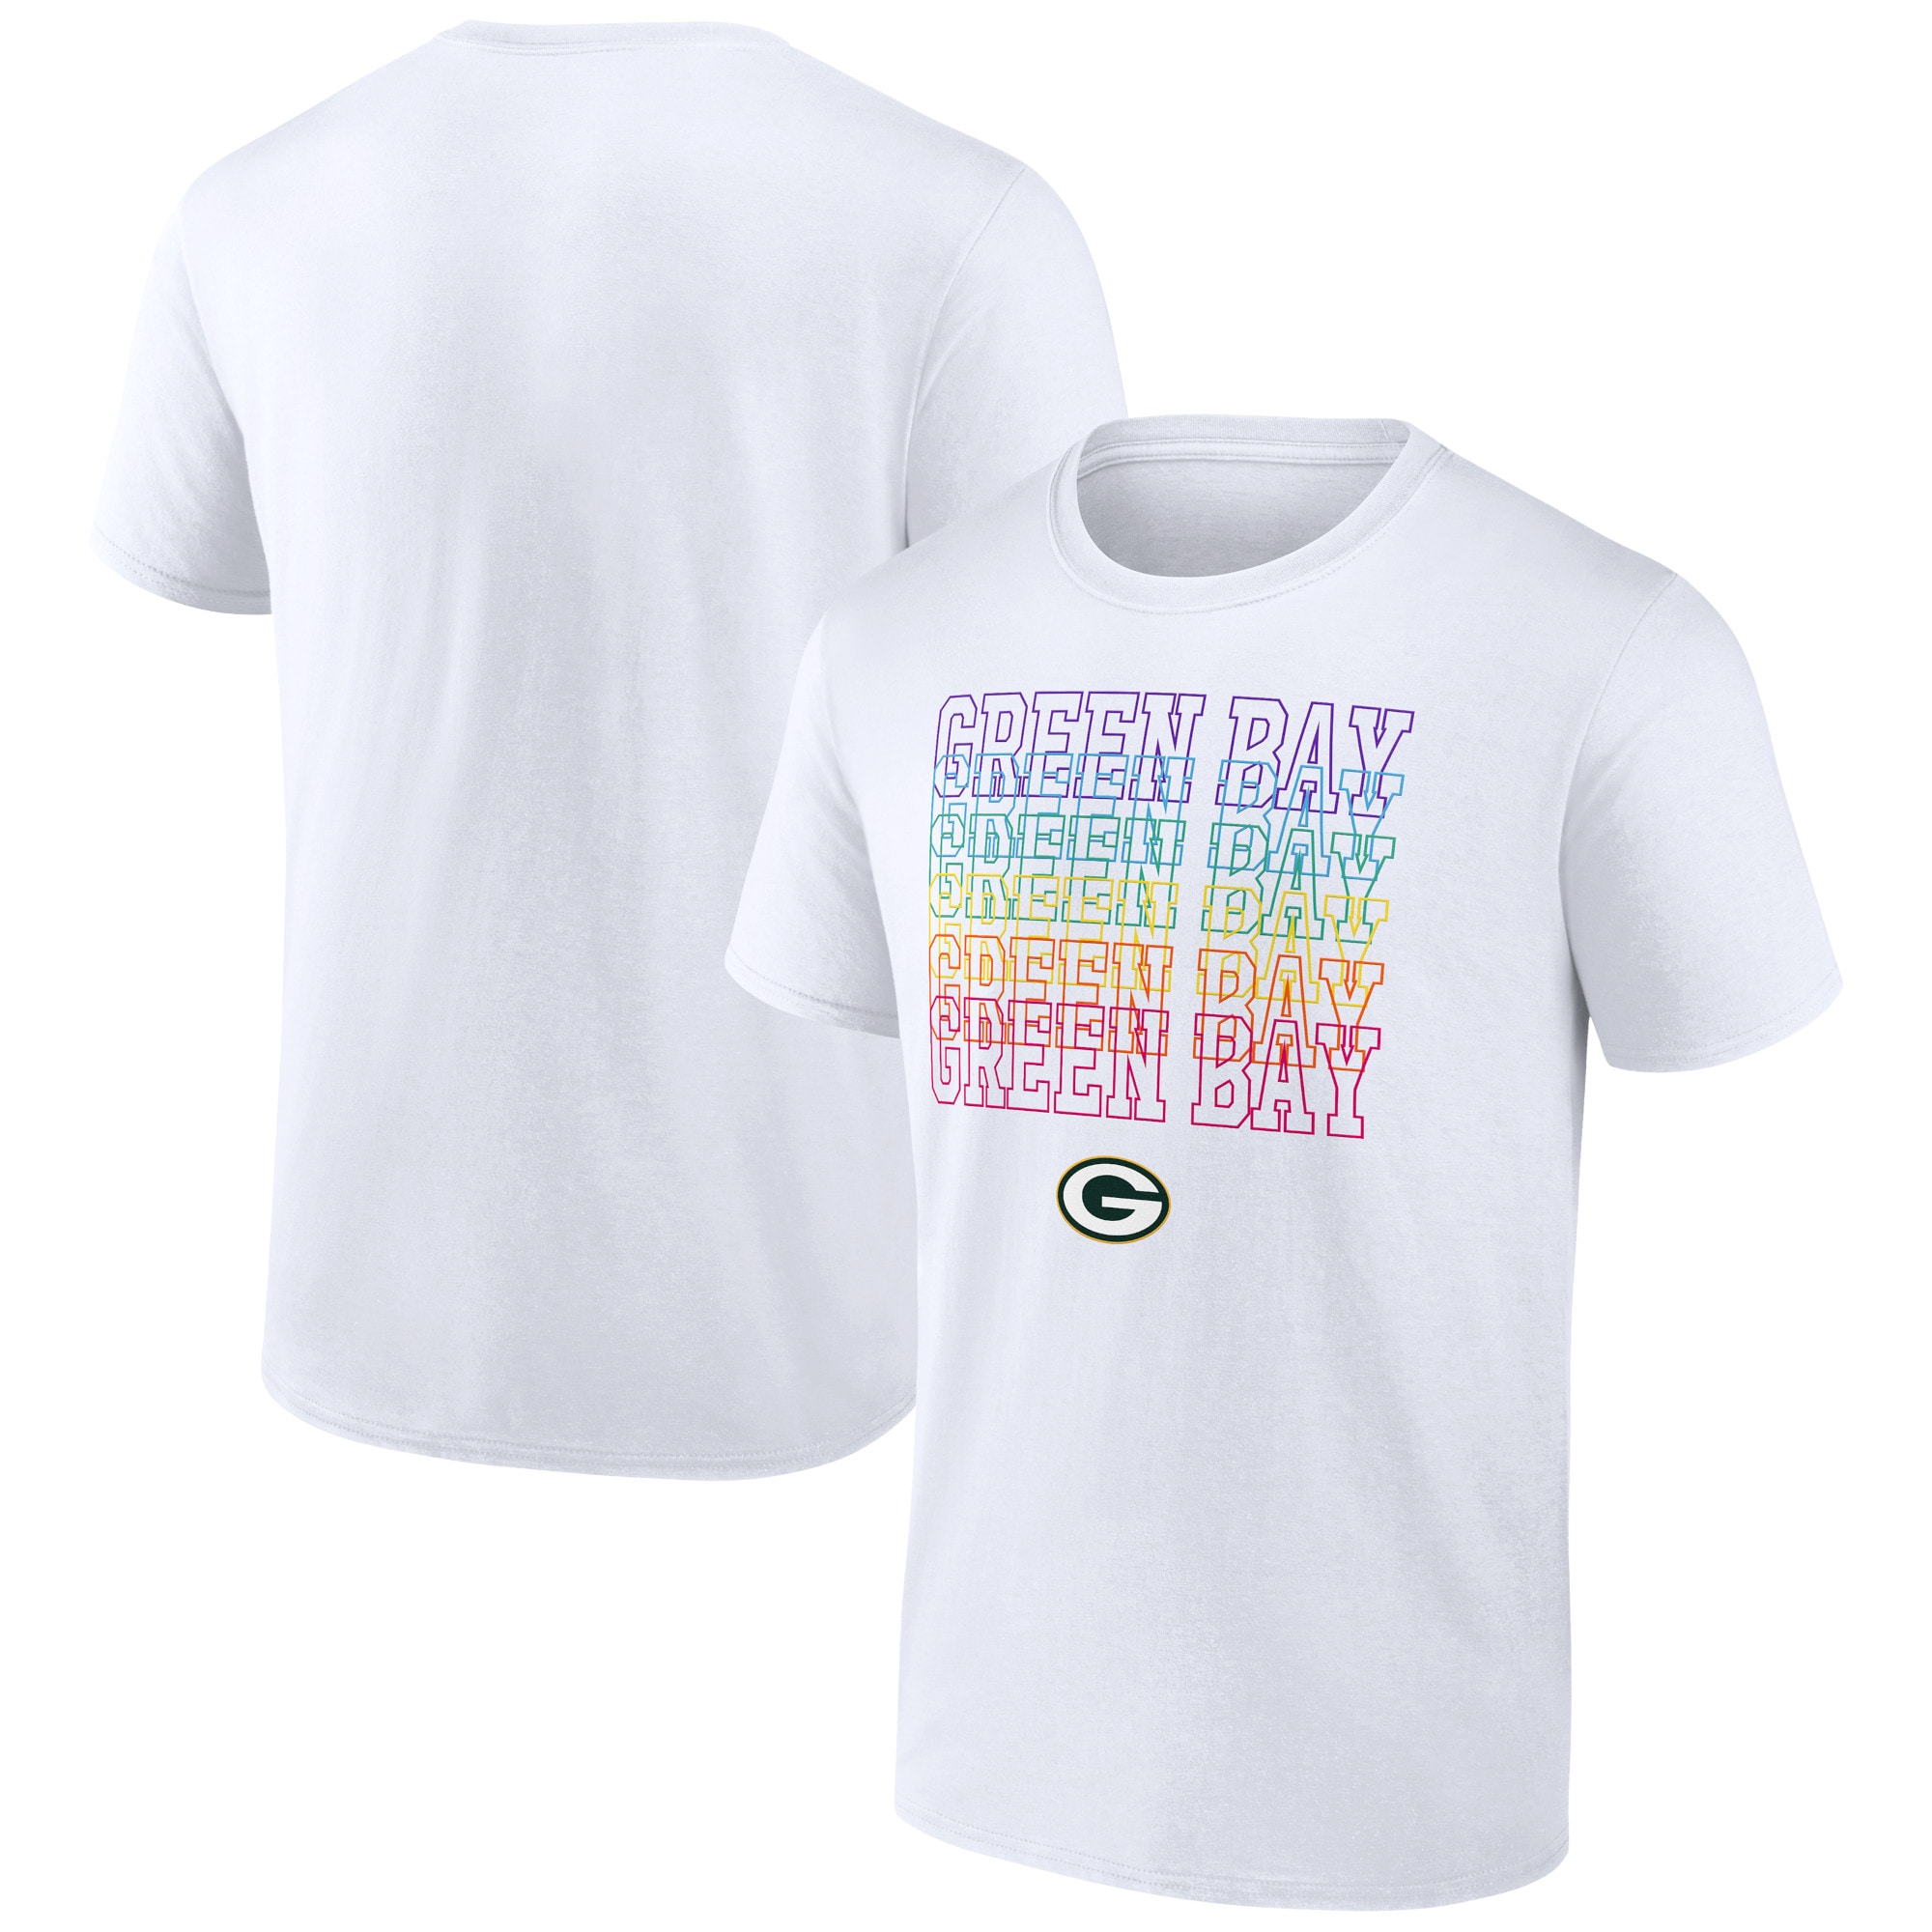 Men's Fanatics Branded White Green Bay Packers City Pride Logo T-Shirt - image 1 of 3